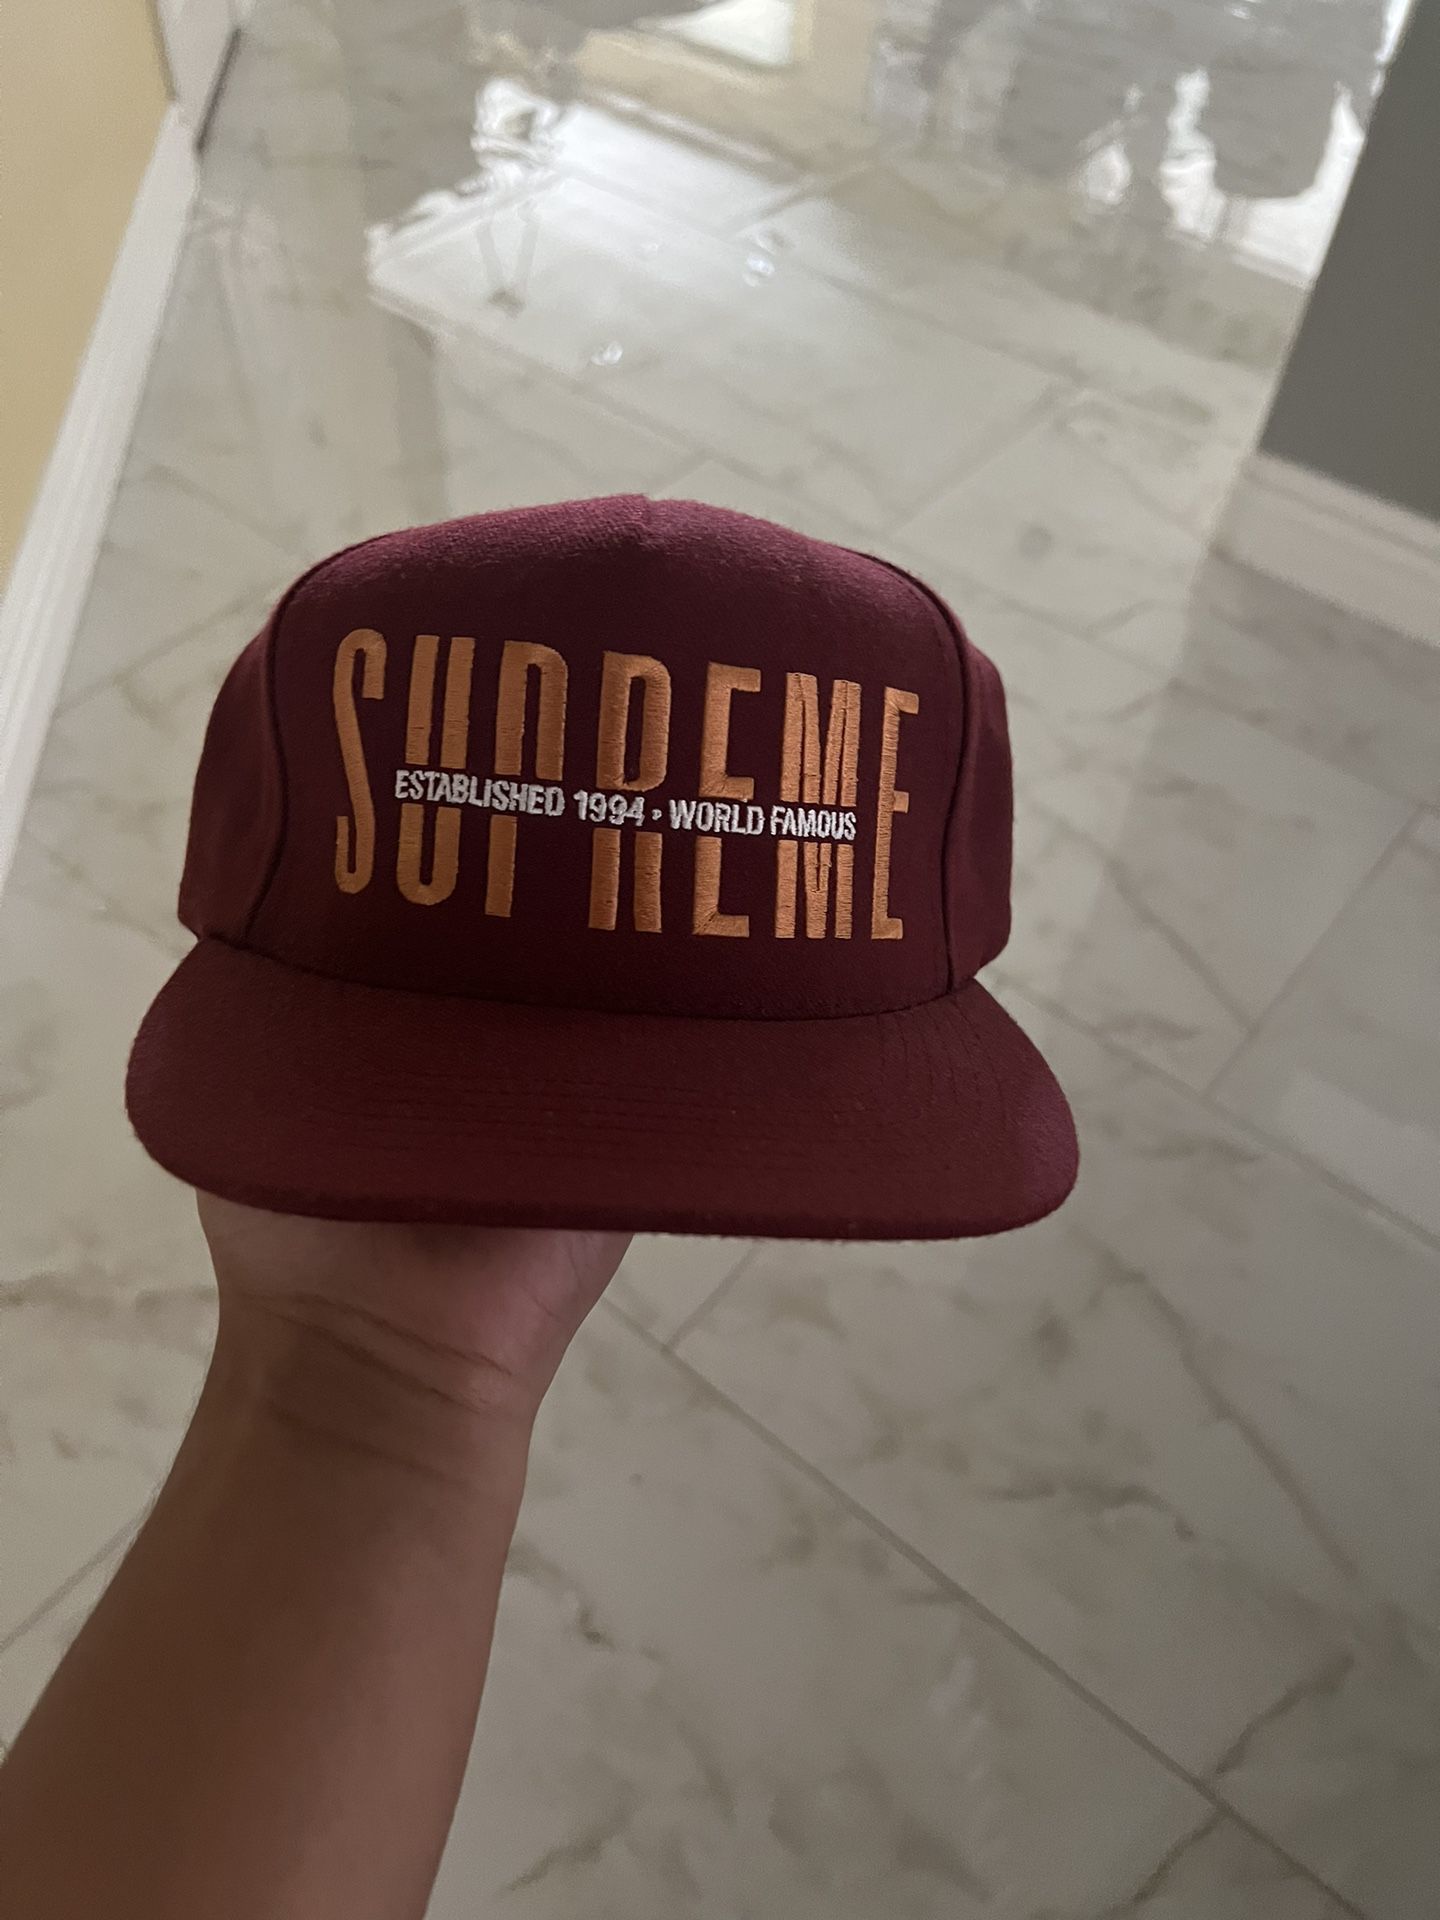 Supreme SnapBack Hat